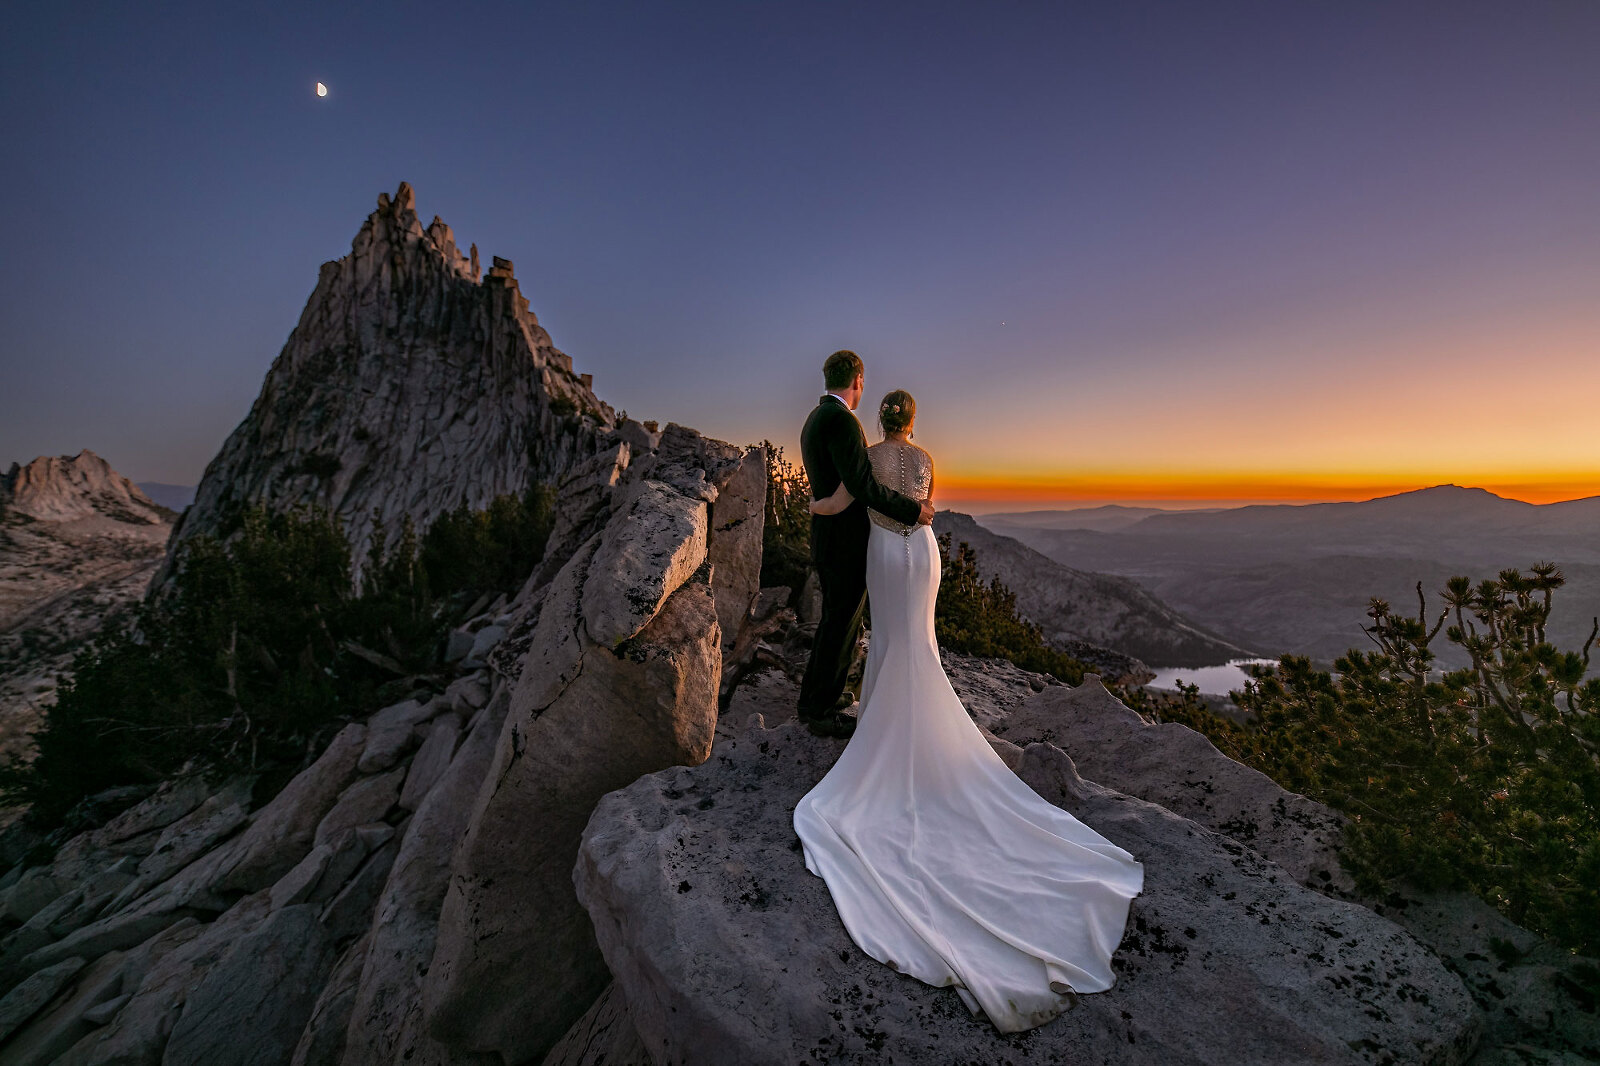 Wedding couple on mountain peak watching sunset with moon